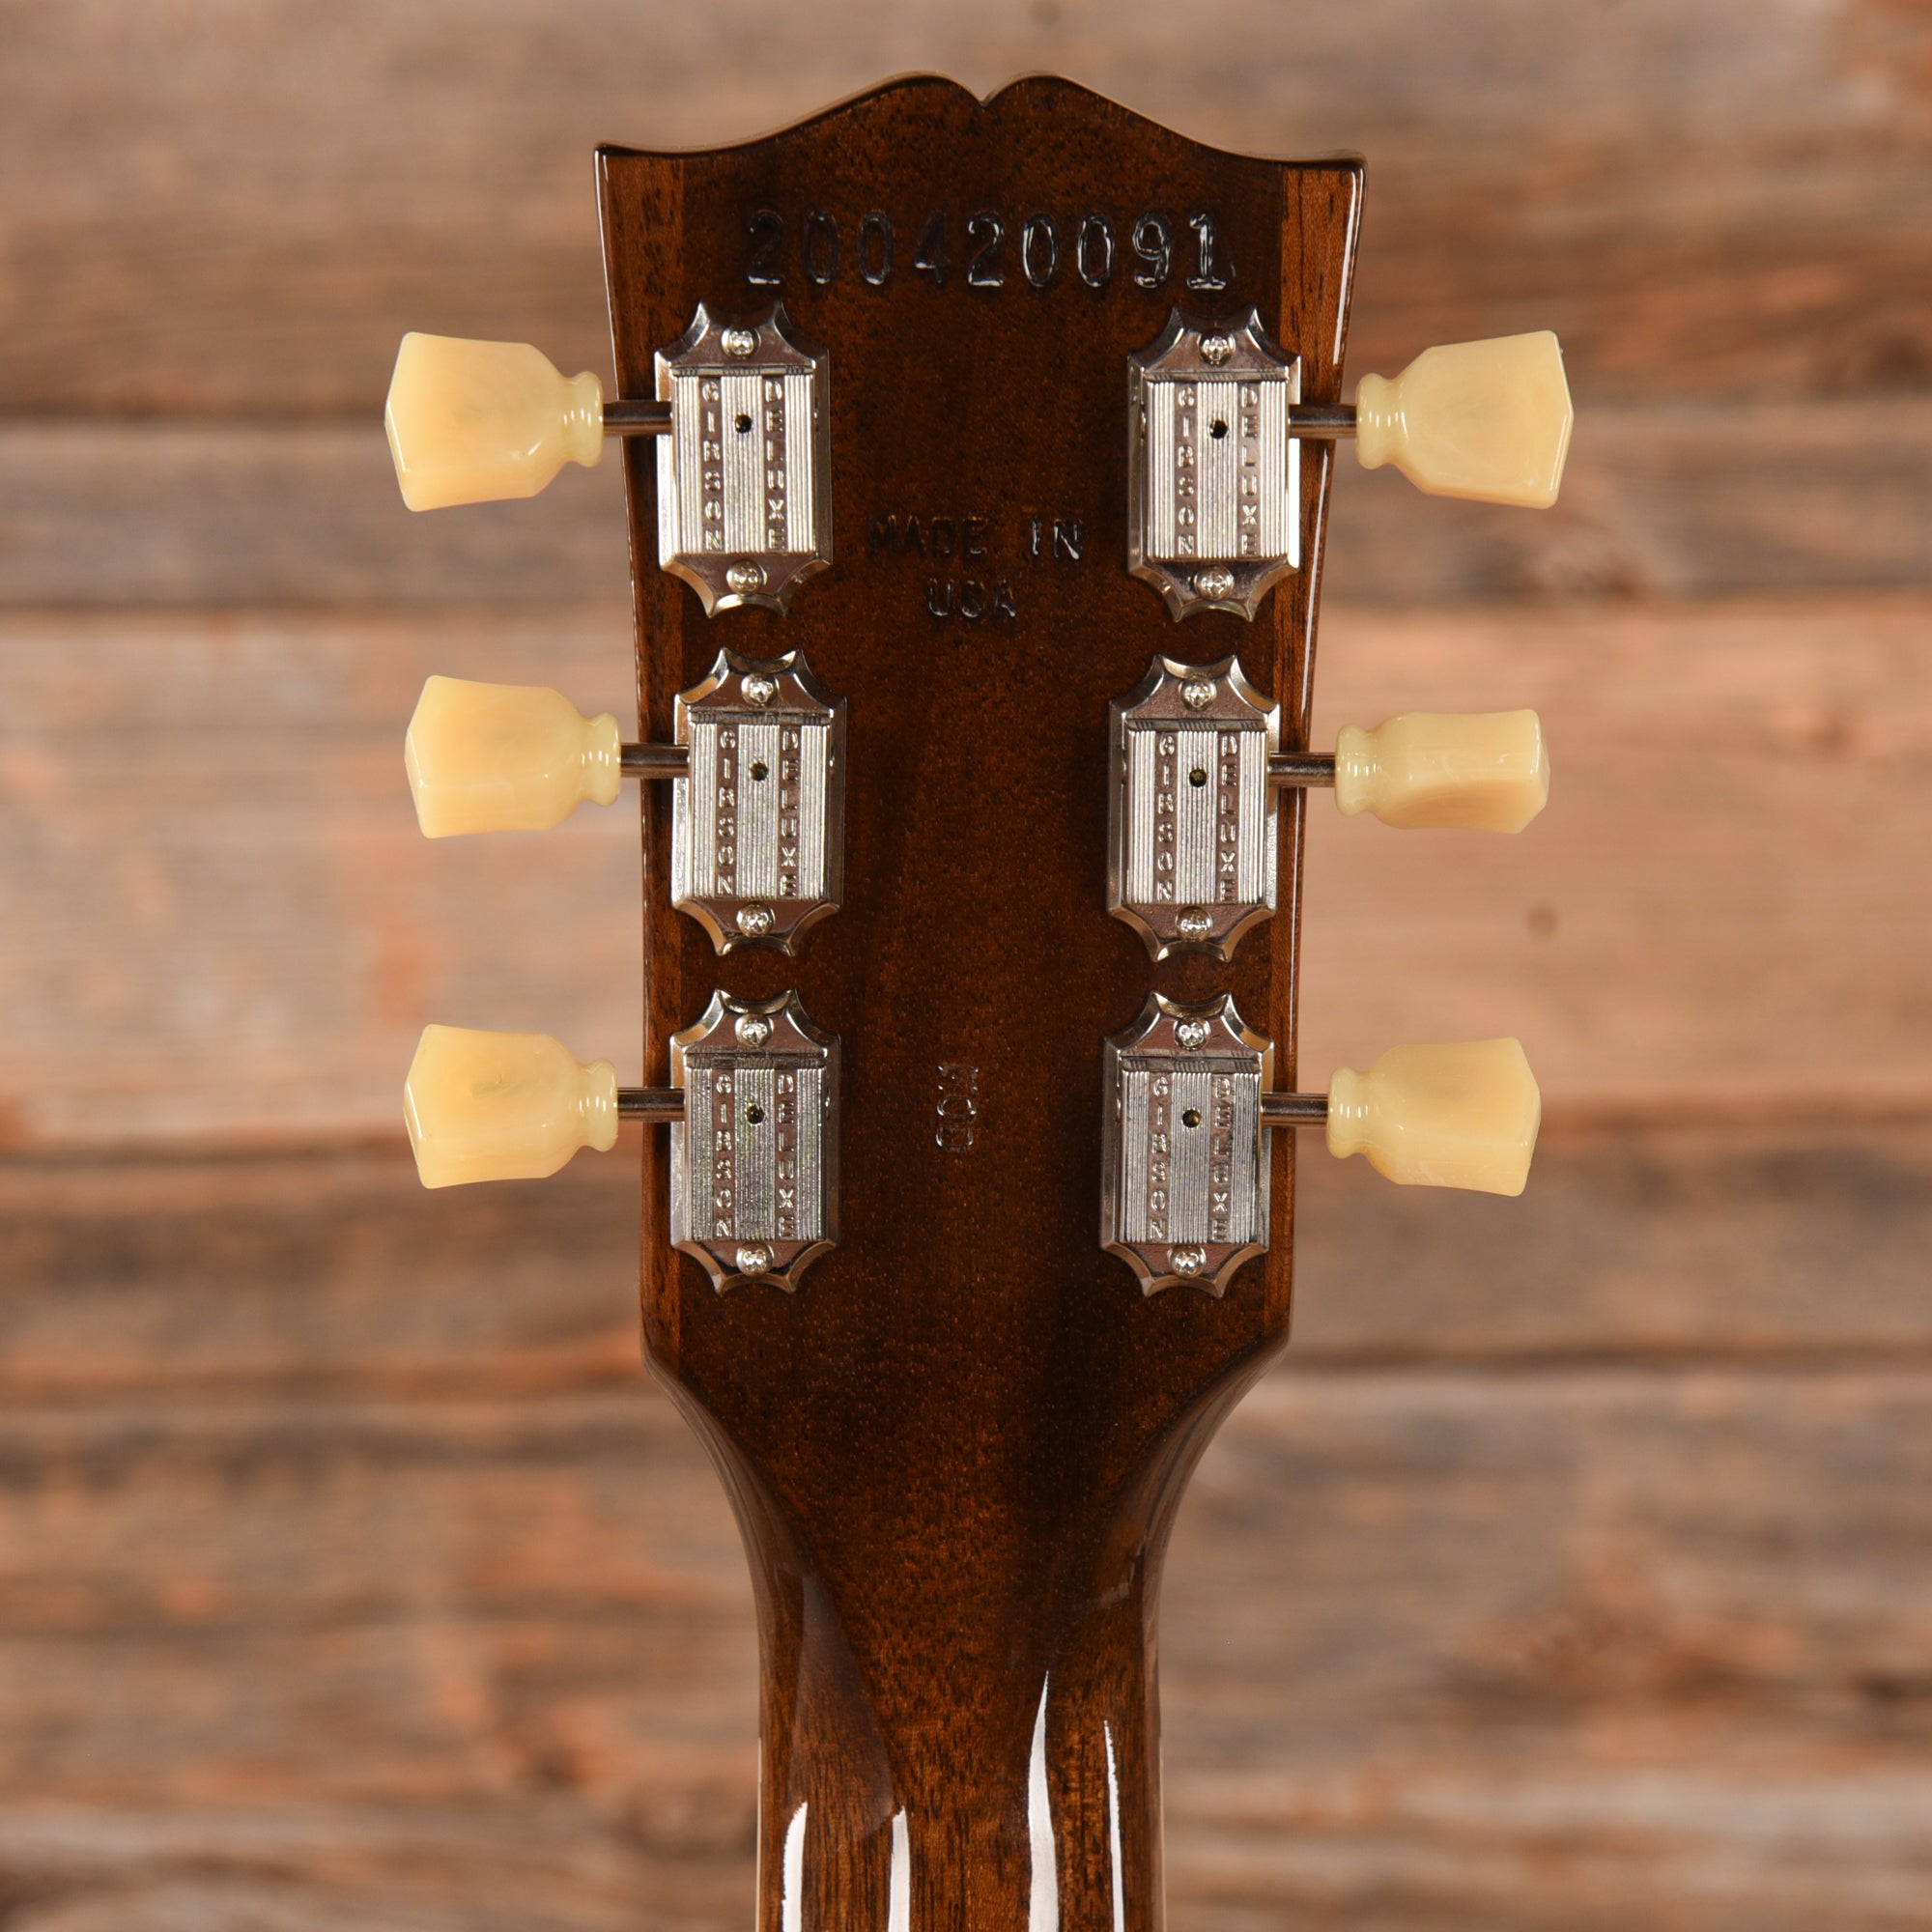 Gibson ES-335 Block Vintage Burst 2022 LEFTY